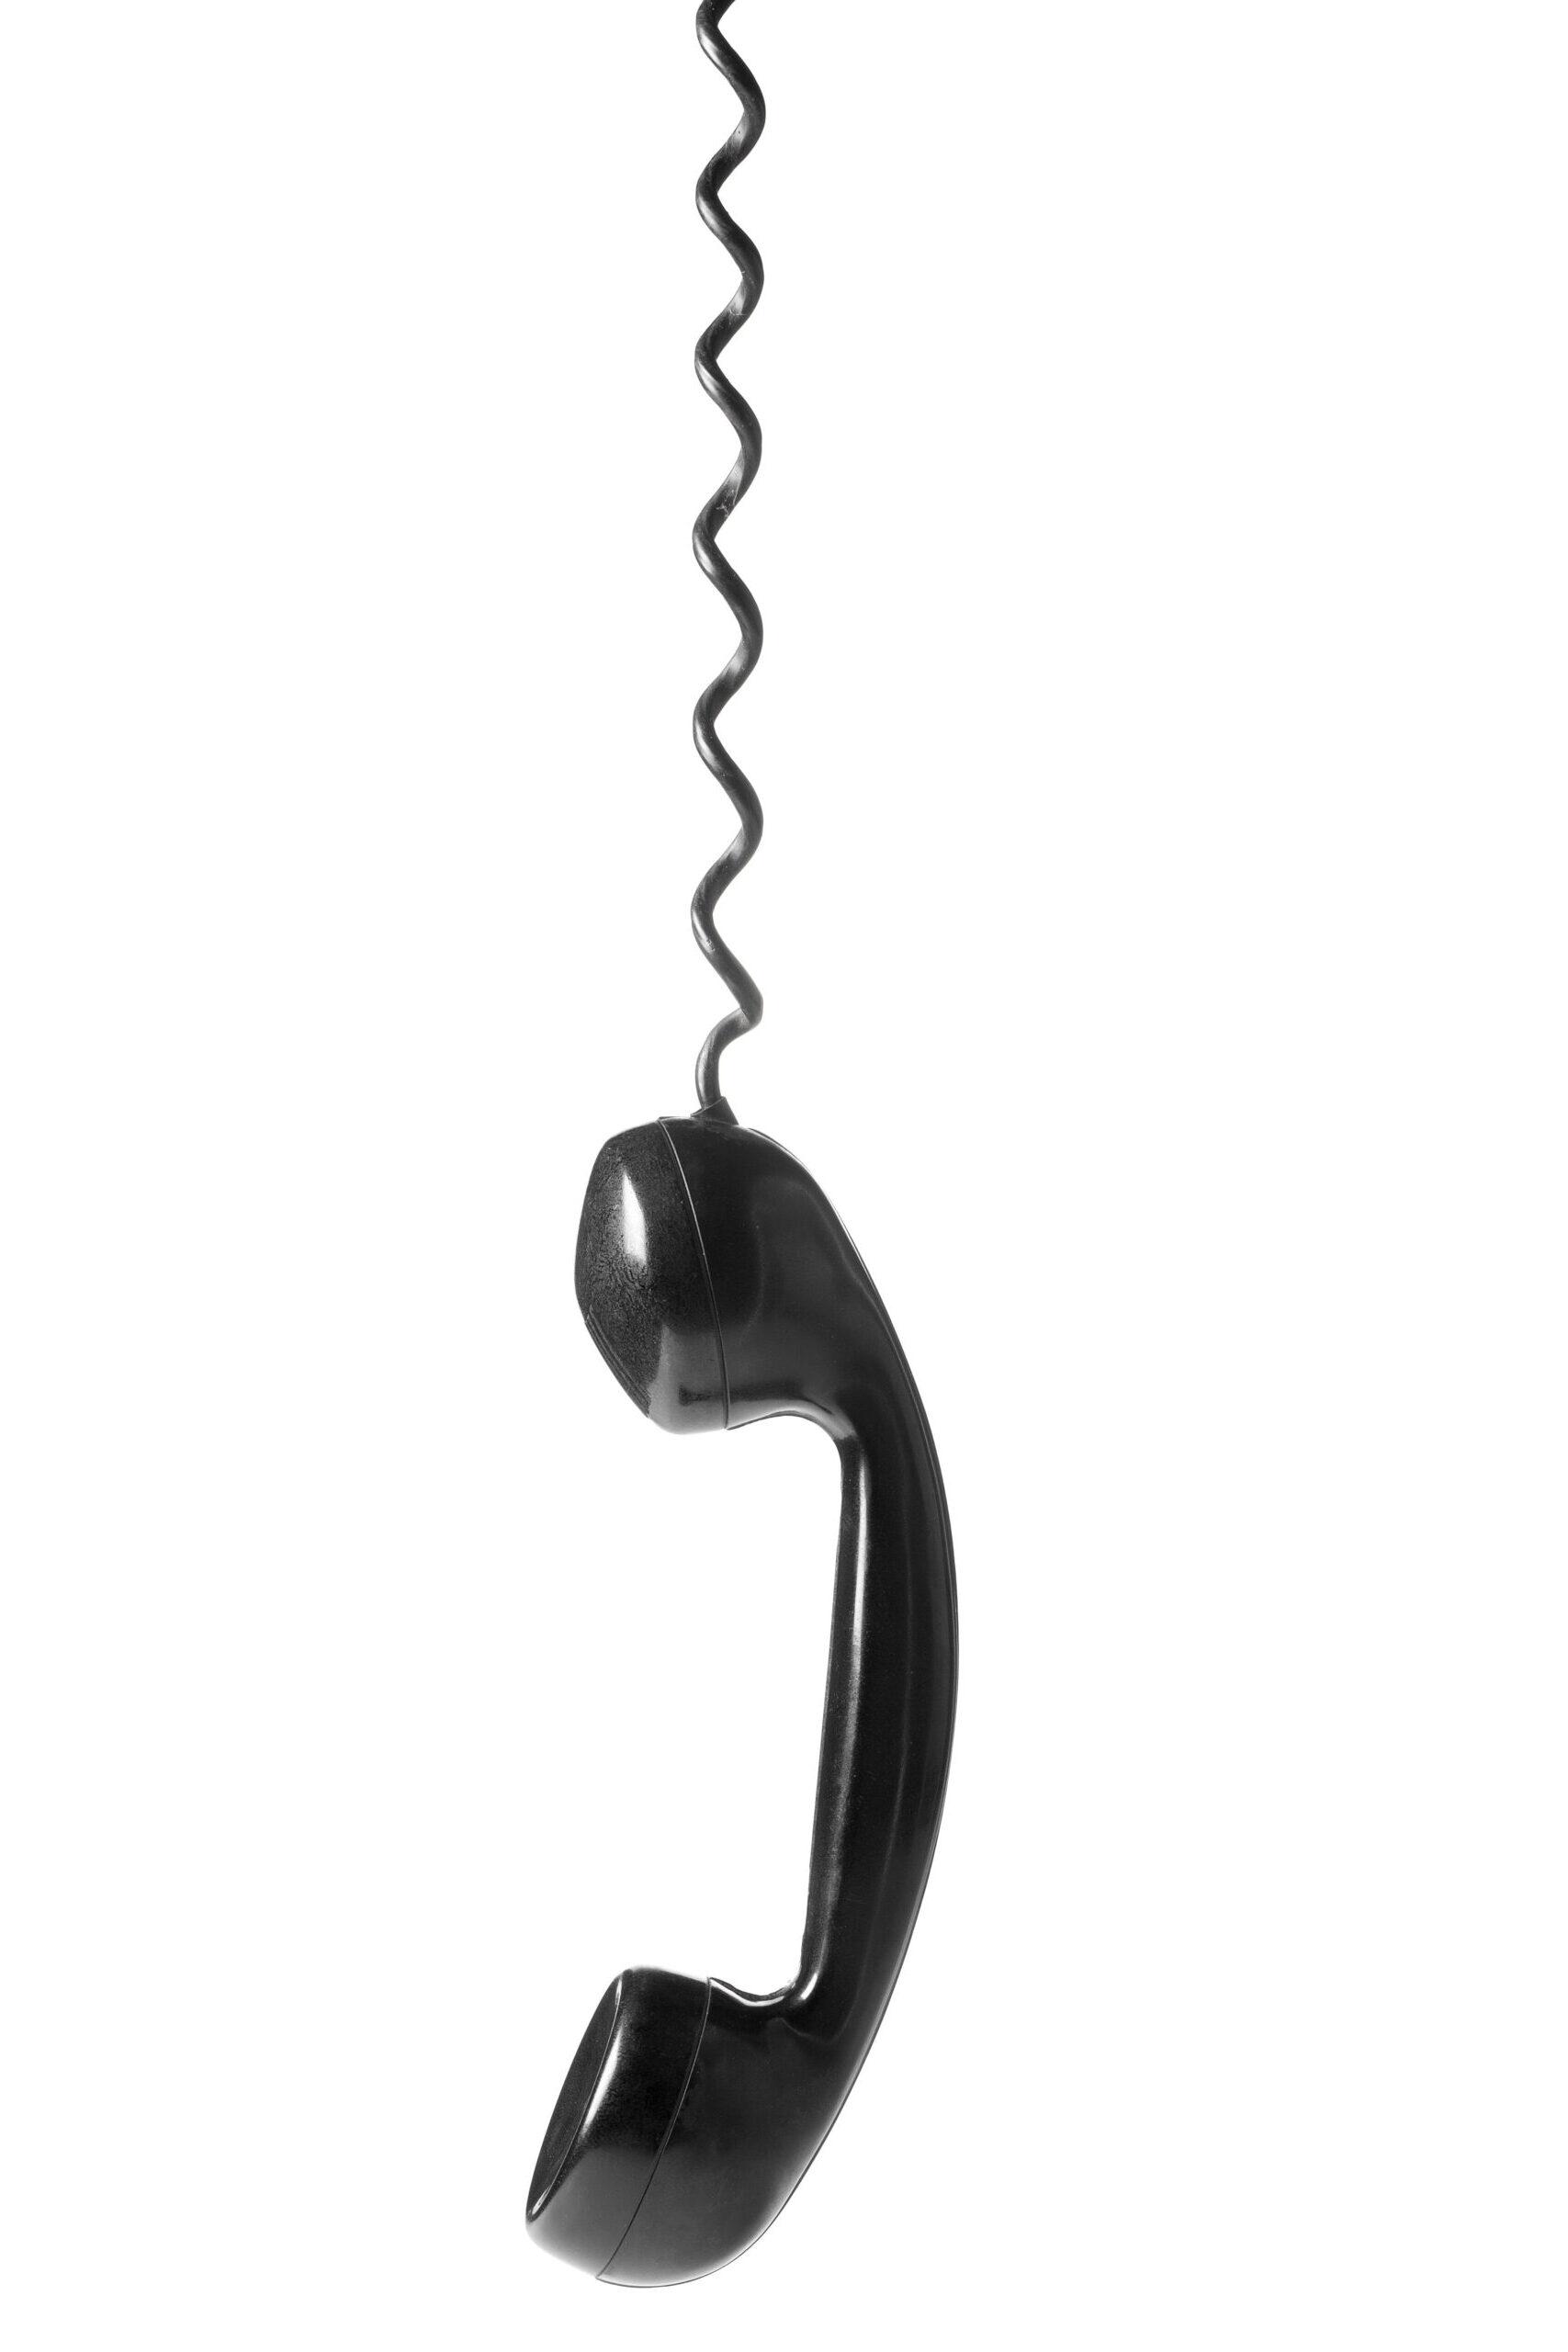 black vintage telephone handset